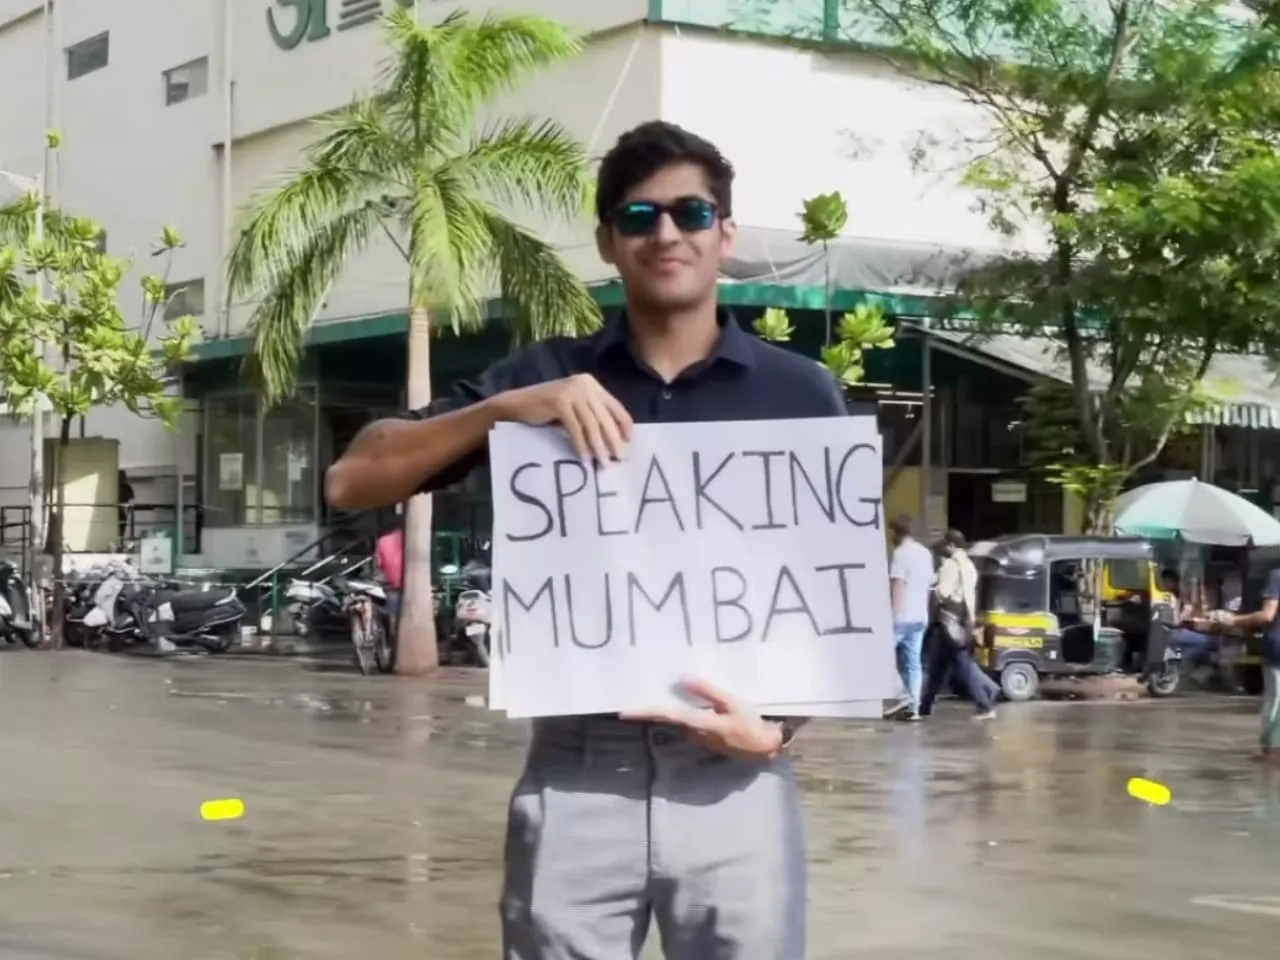 Vir Saini's 'How to speak Mumbai' series takes you on a humorous dive into Mumbai's local Slangs